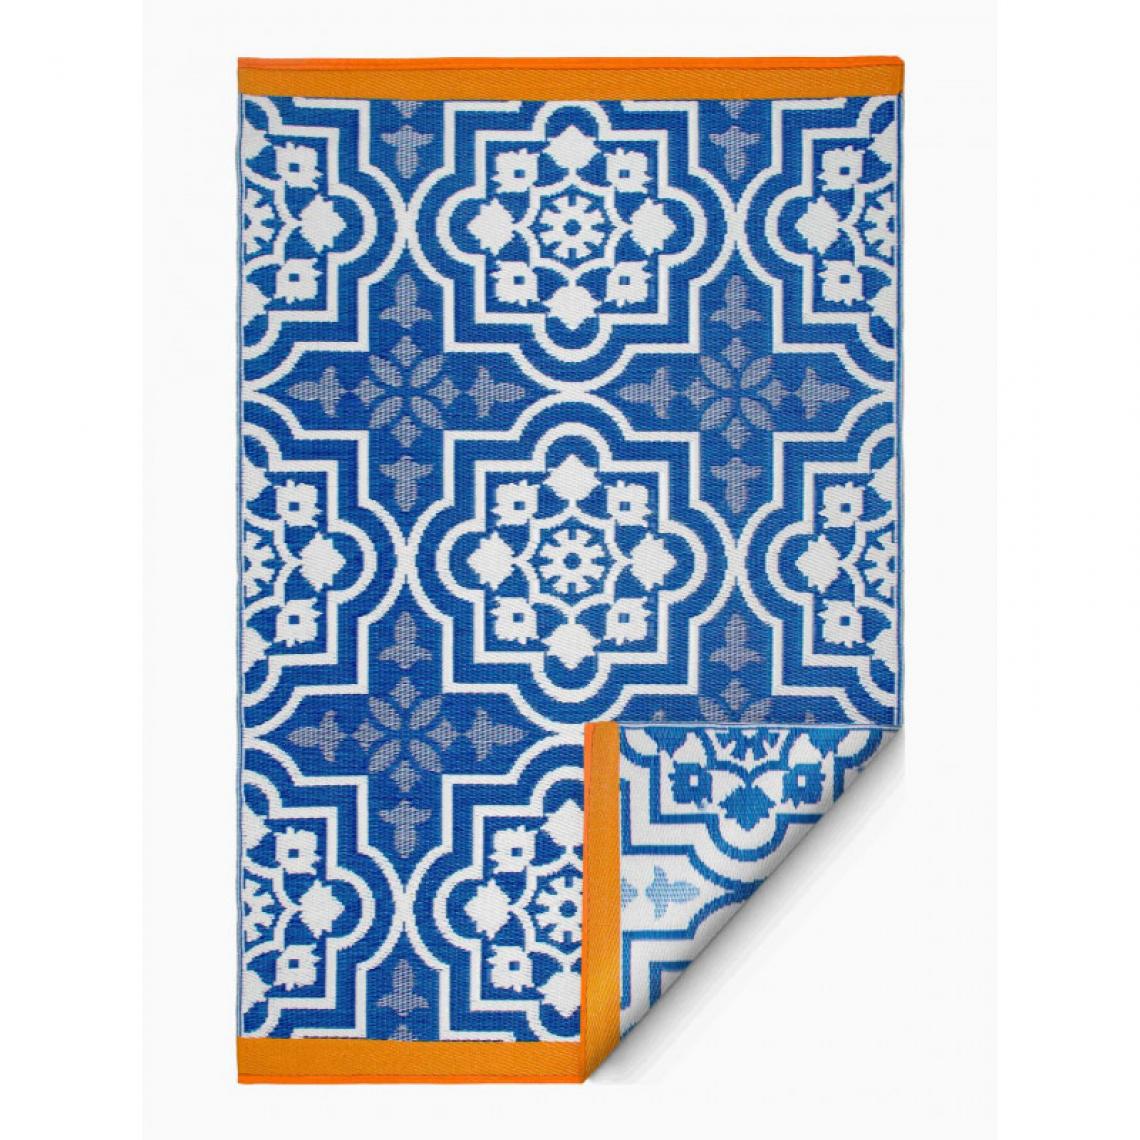 Ac-Deco - Tapis Puebla - L 150 x l 240 cm - Bleu et orange - Tapis